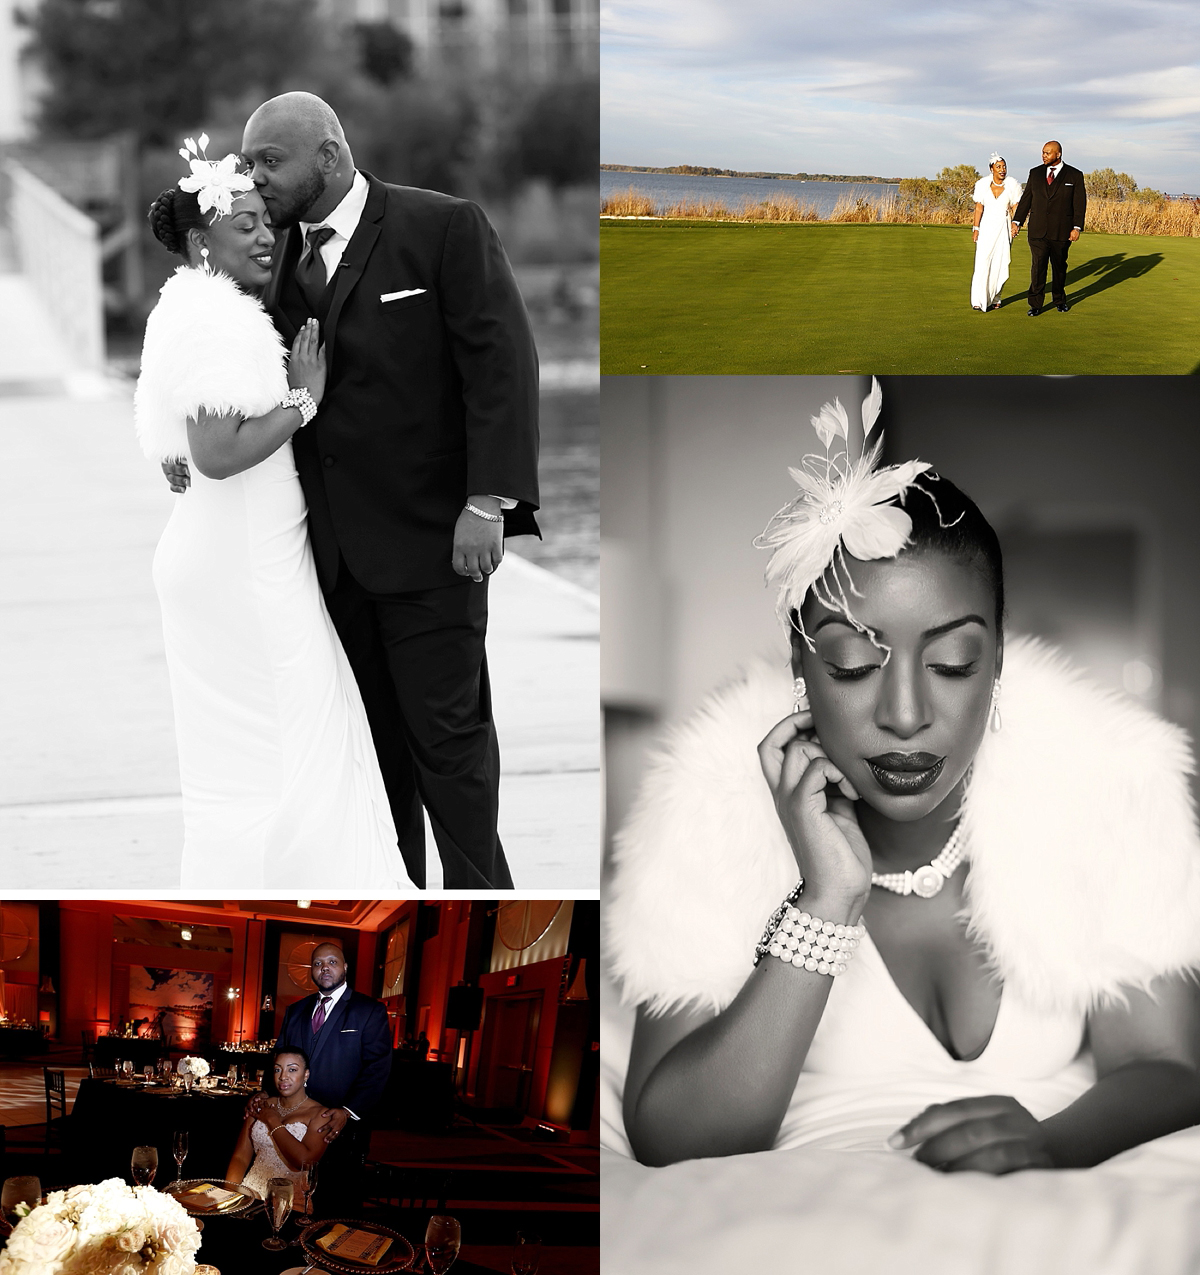 Hyatt Regency Chesapeake Bay Resort Wedding Photographer | Sneak Preview:  Joy and Troy’s Amazing Wedding!!